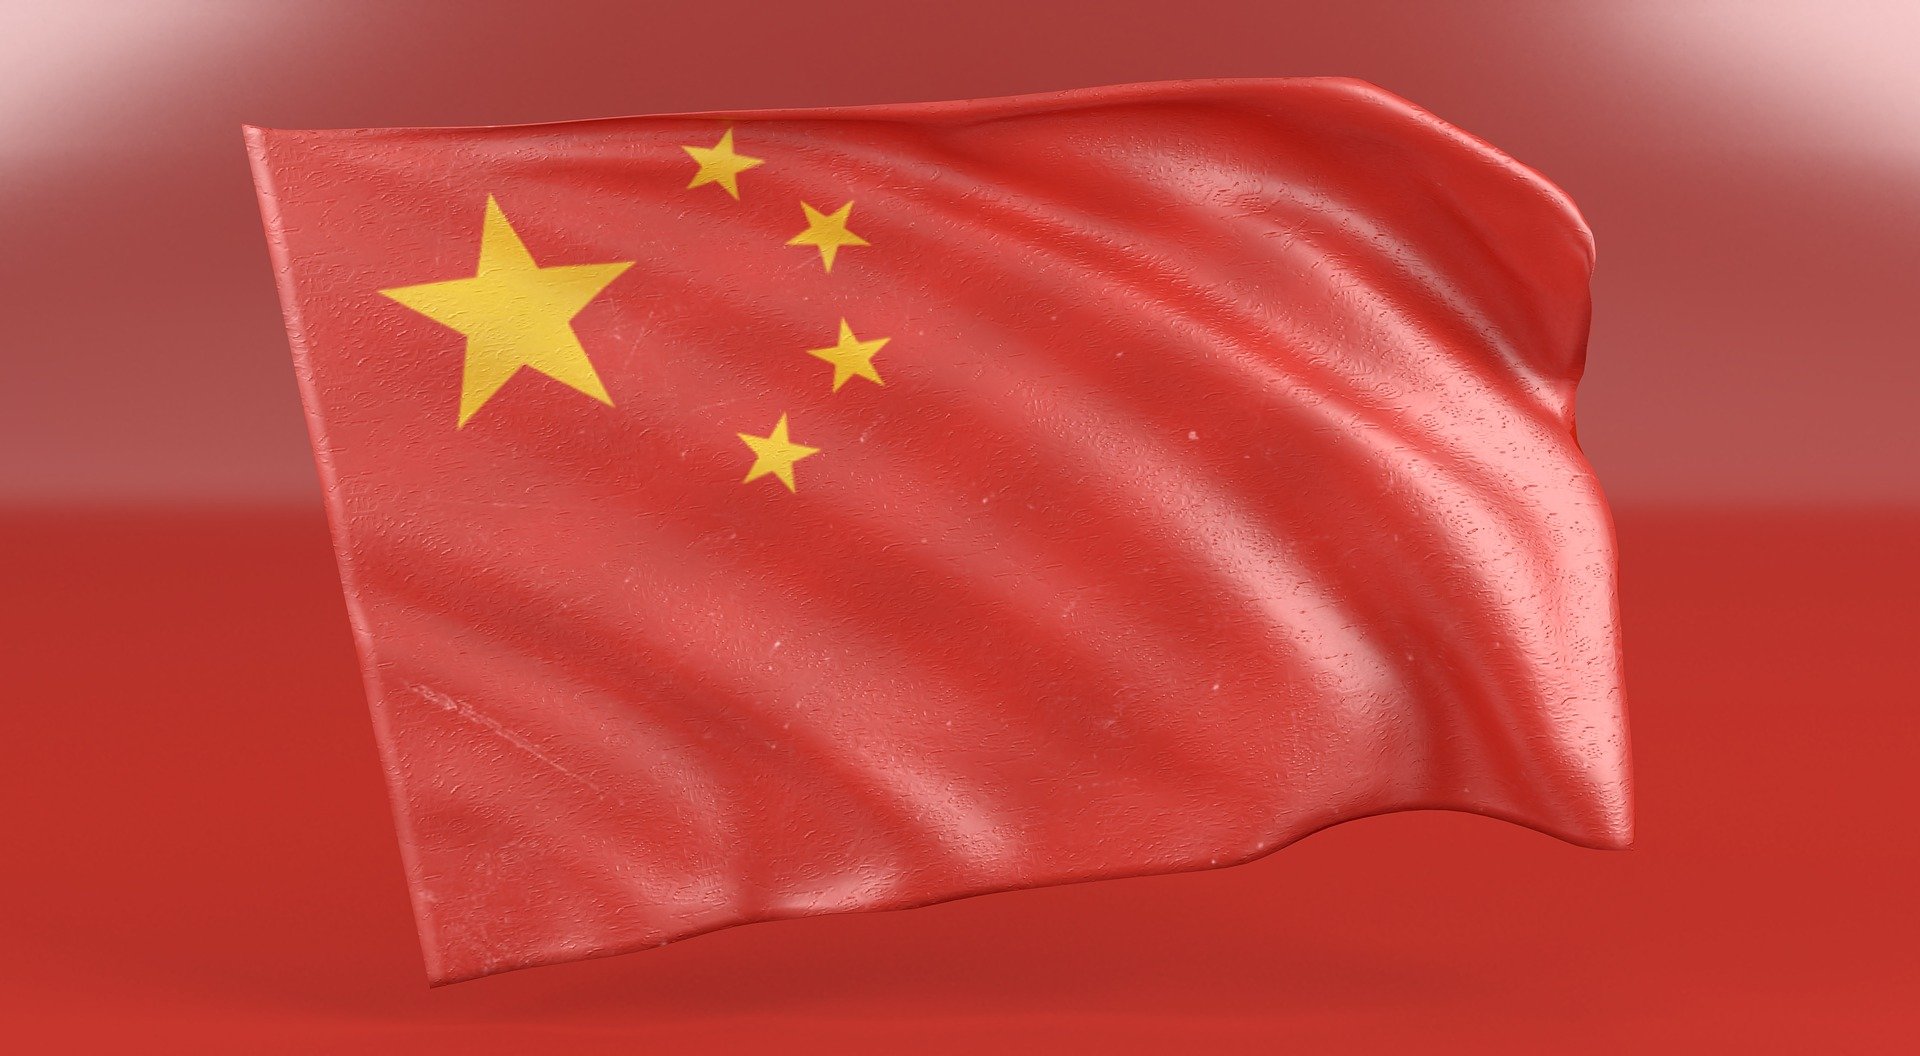 Kinesisk flagga